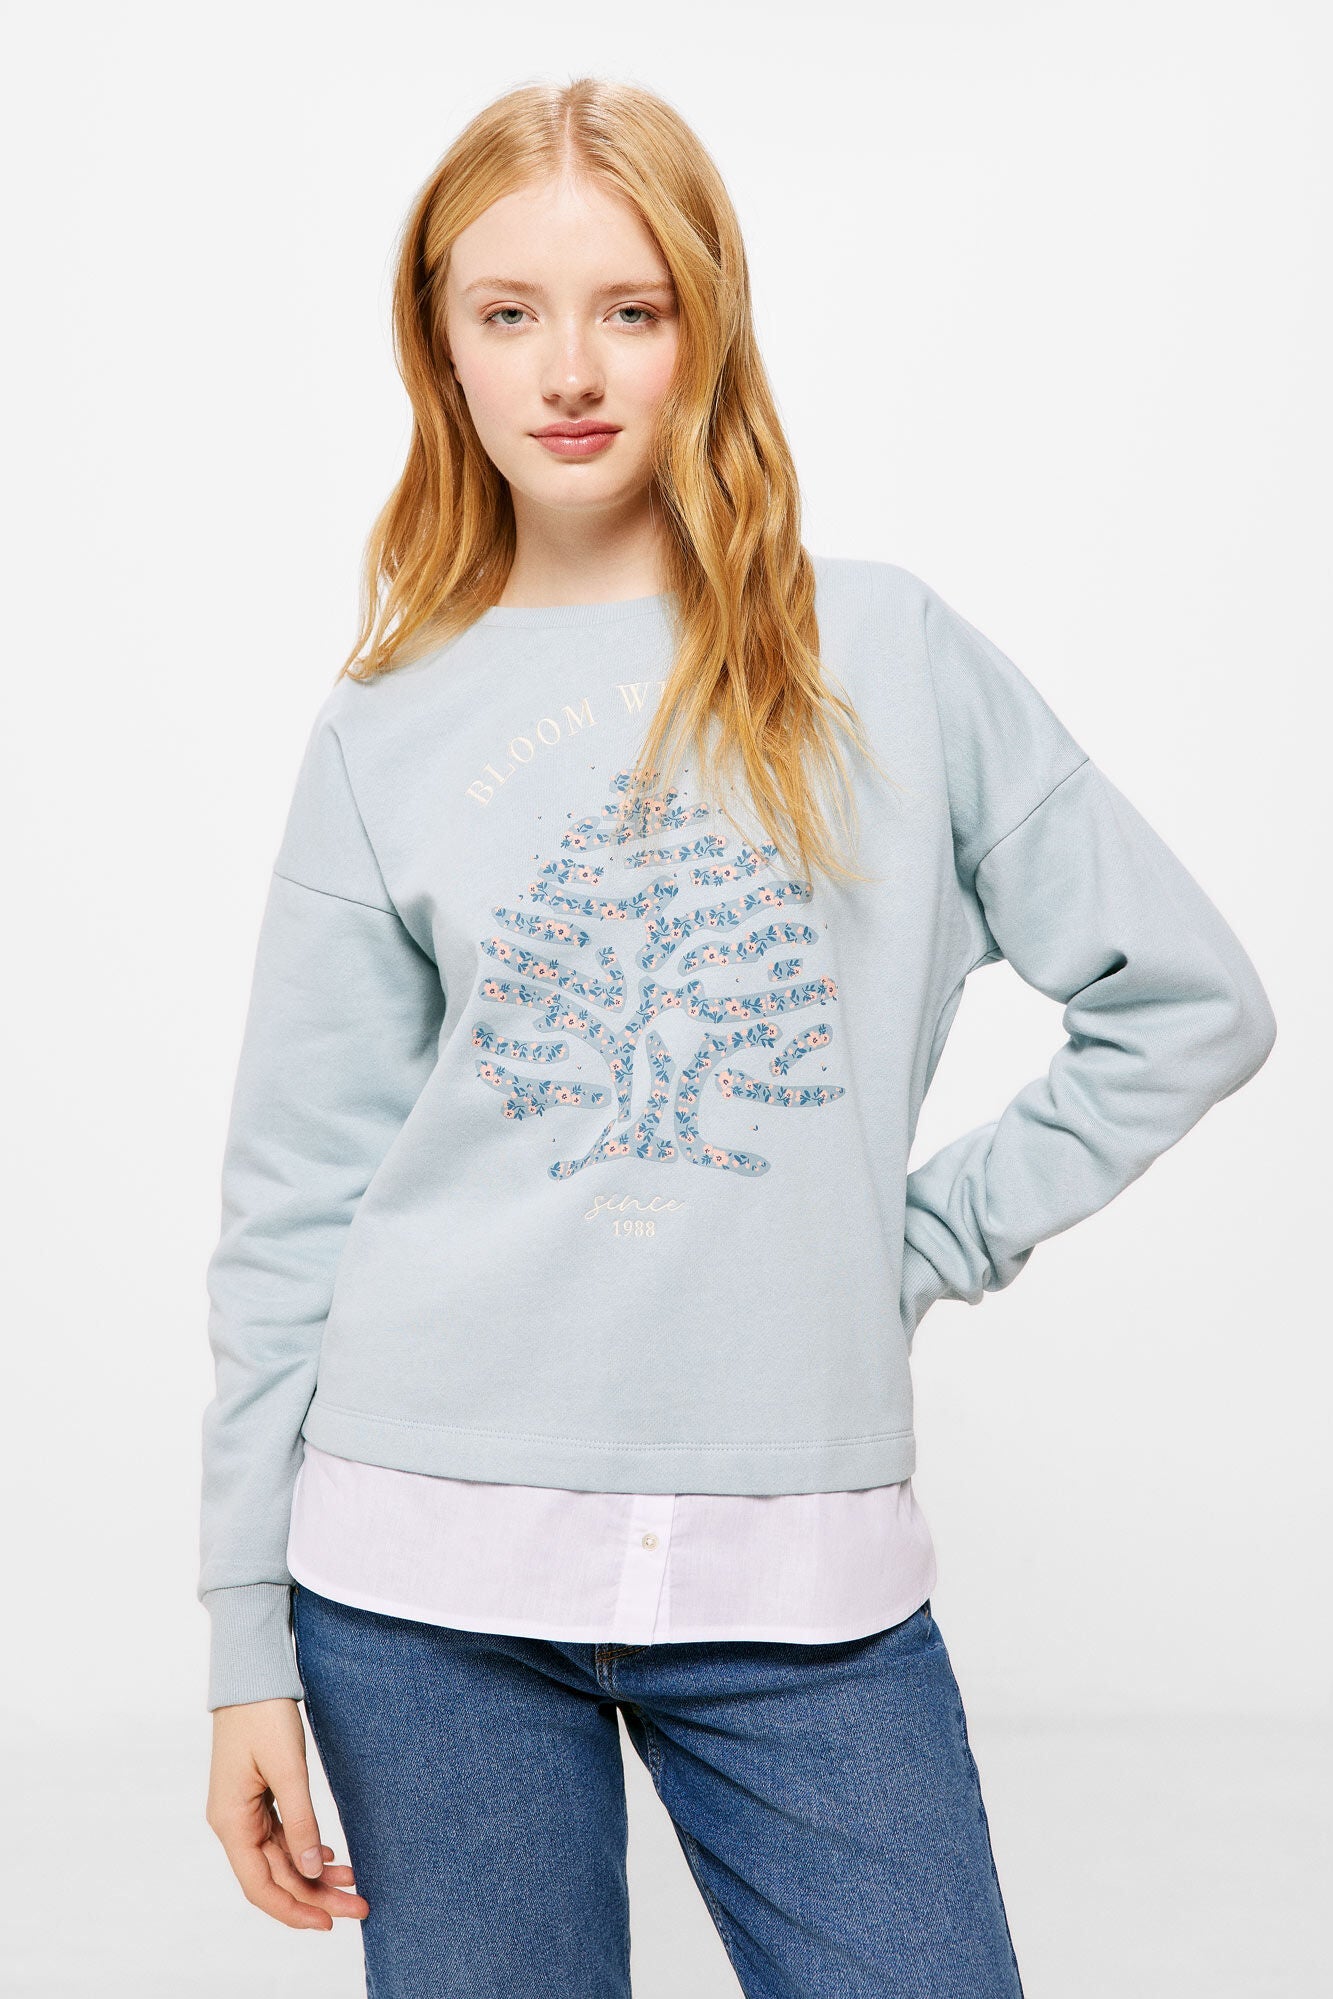 "Bloom with me" tree sweatshirt